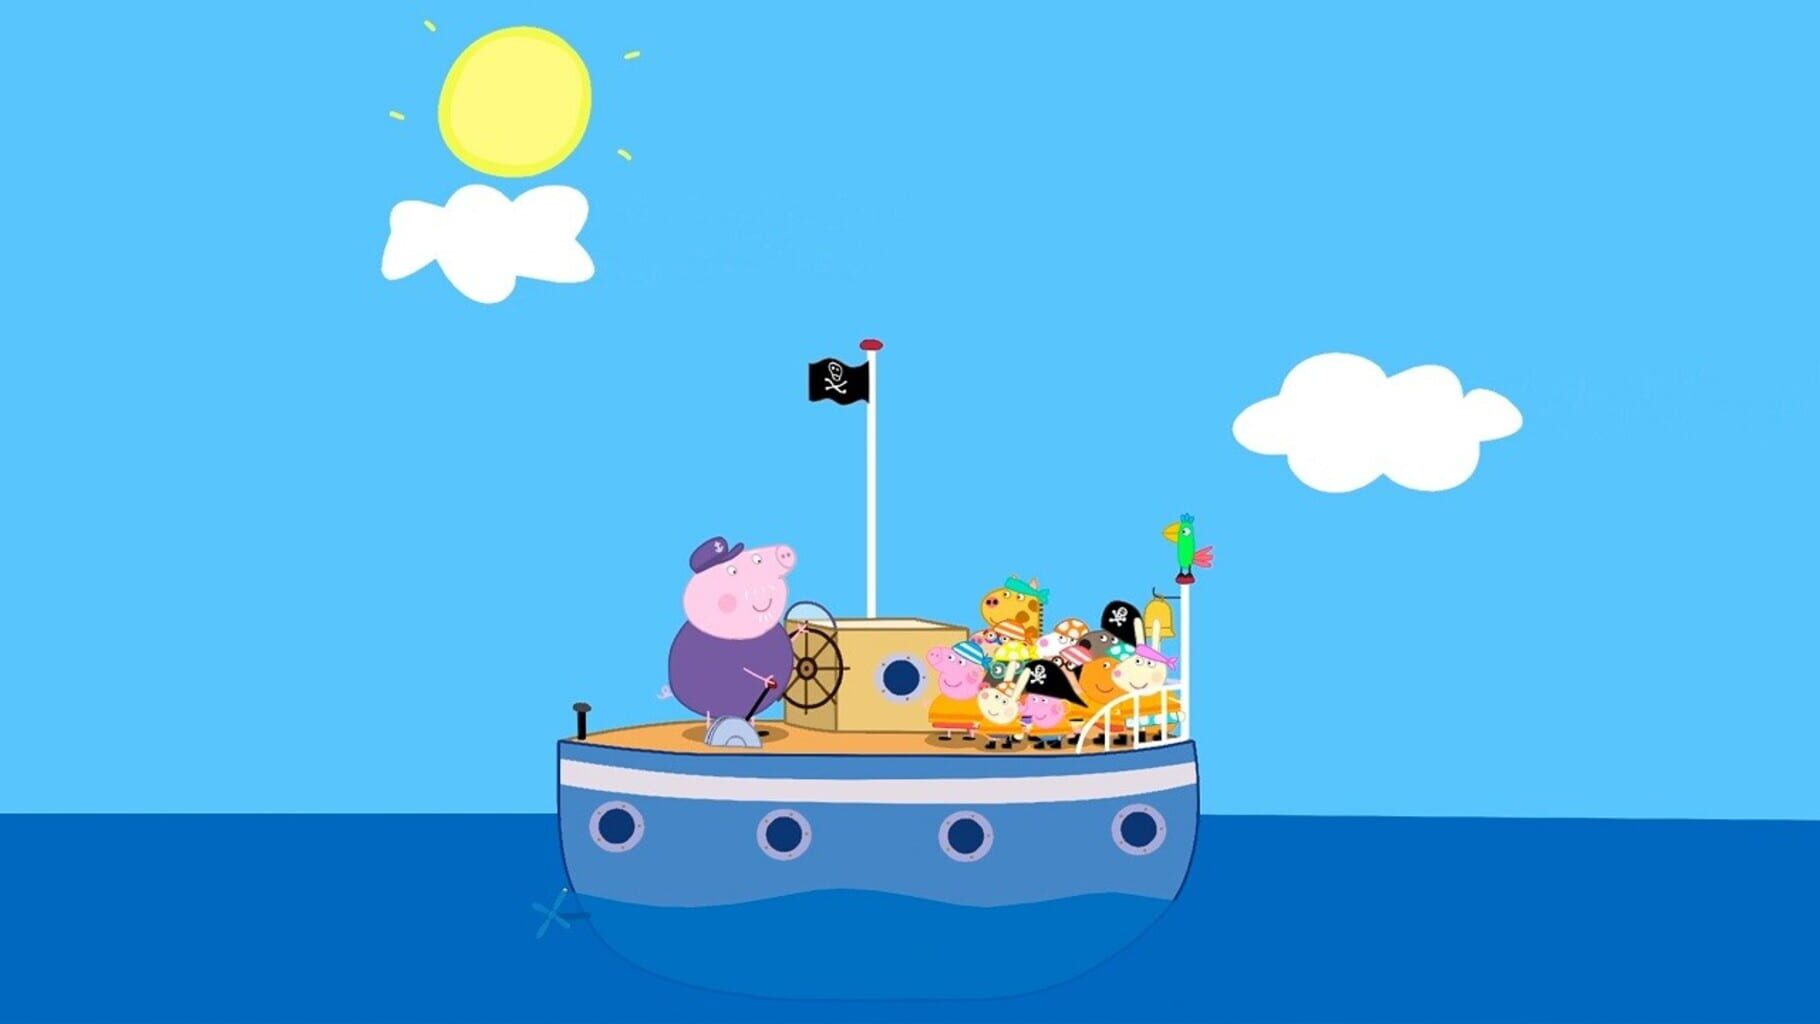 My Friend Peppa Pig: Pirate Adventures Image